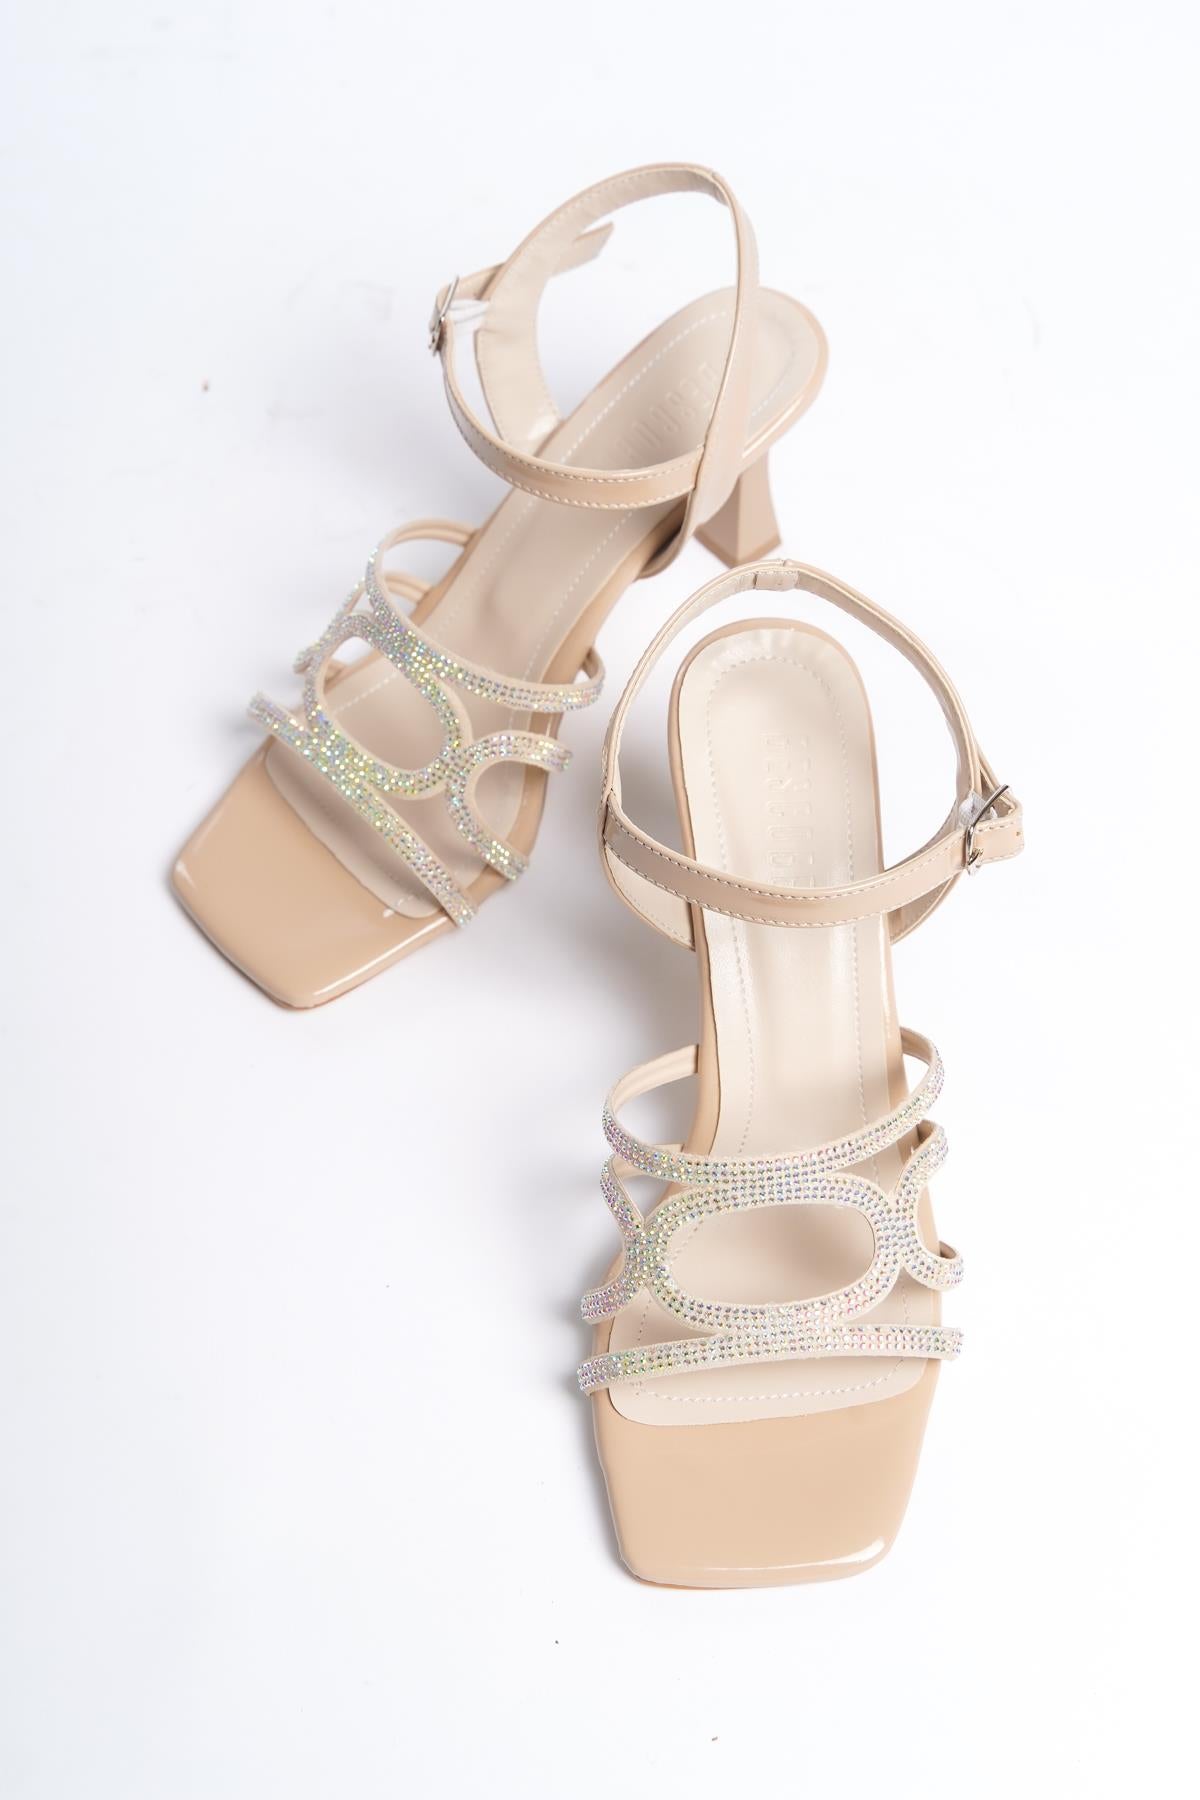 Women's Patent Leather Nut Thin Heel Stone Sandals 8 cm Heel - STREETMODE™